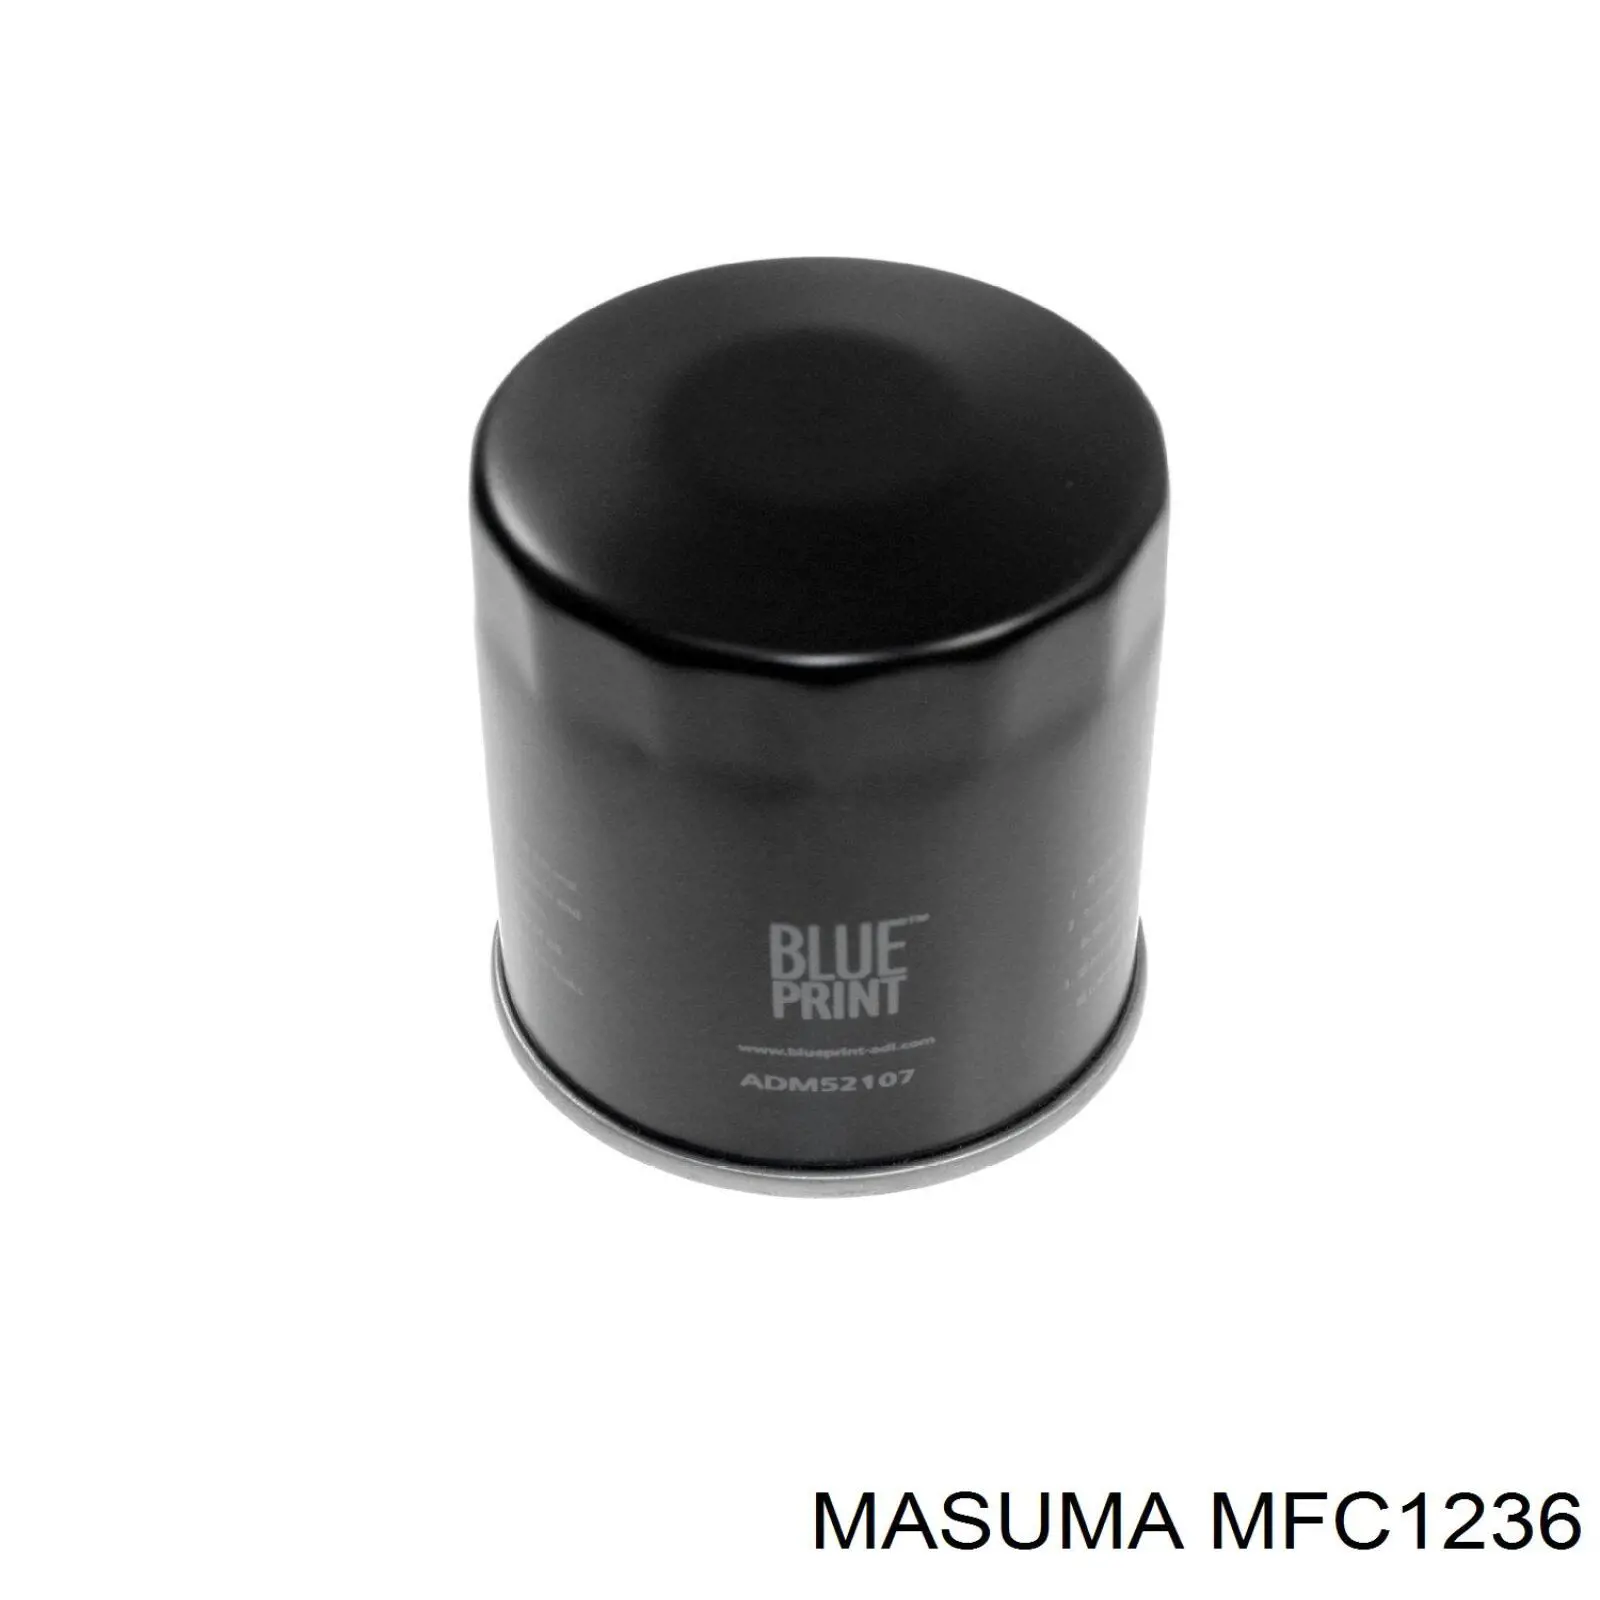 MFC1236 Masuma filtro de aceite